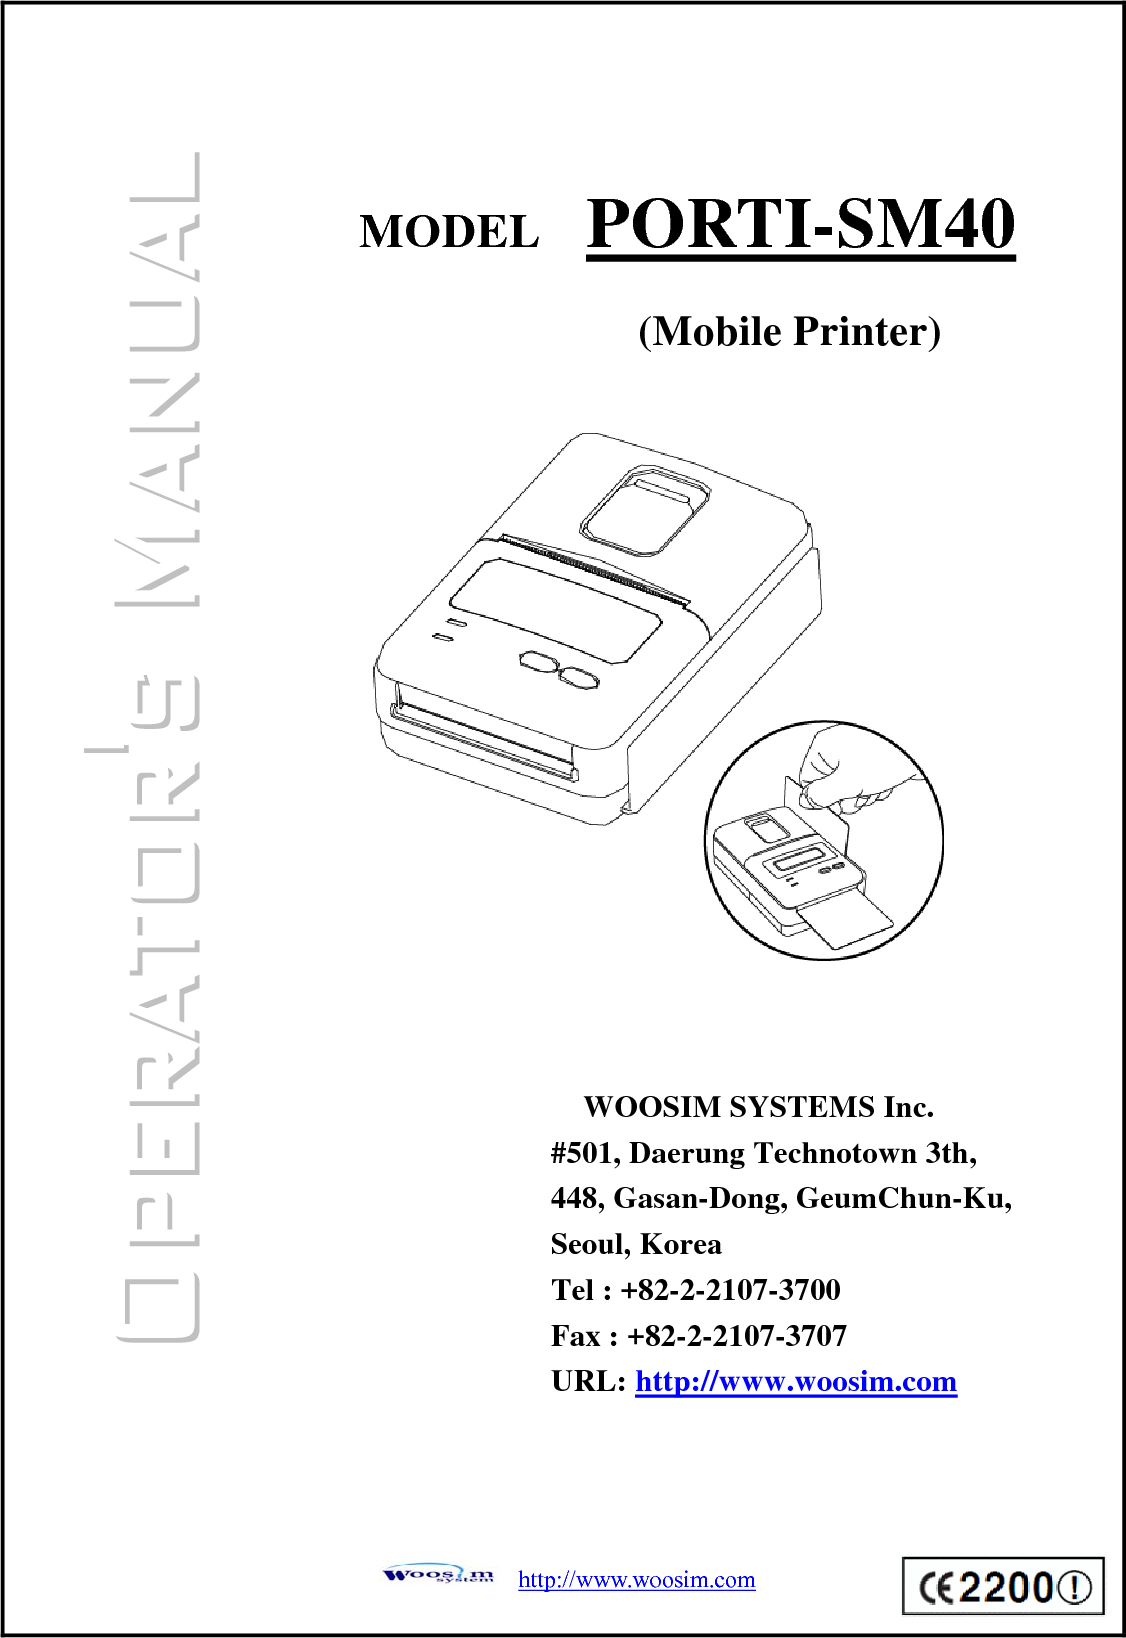  http://www.woosim.com                                    MODEL  PORTI-SM40 WOOSIM SYSTEMS Inc. #501, Daerung Technotown 3th, 448, Gasan-Dong, GeumChun-Ku, Seoul, Korea Tel : +82-2-2107-3700 Fax : +82-2-2107-3707 URL: http://www.woosim.com (Mobile Printer)  